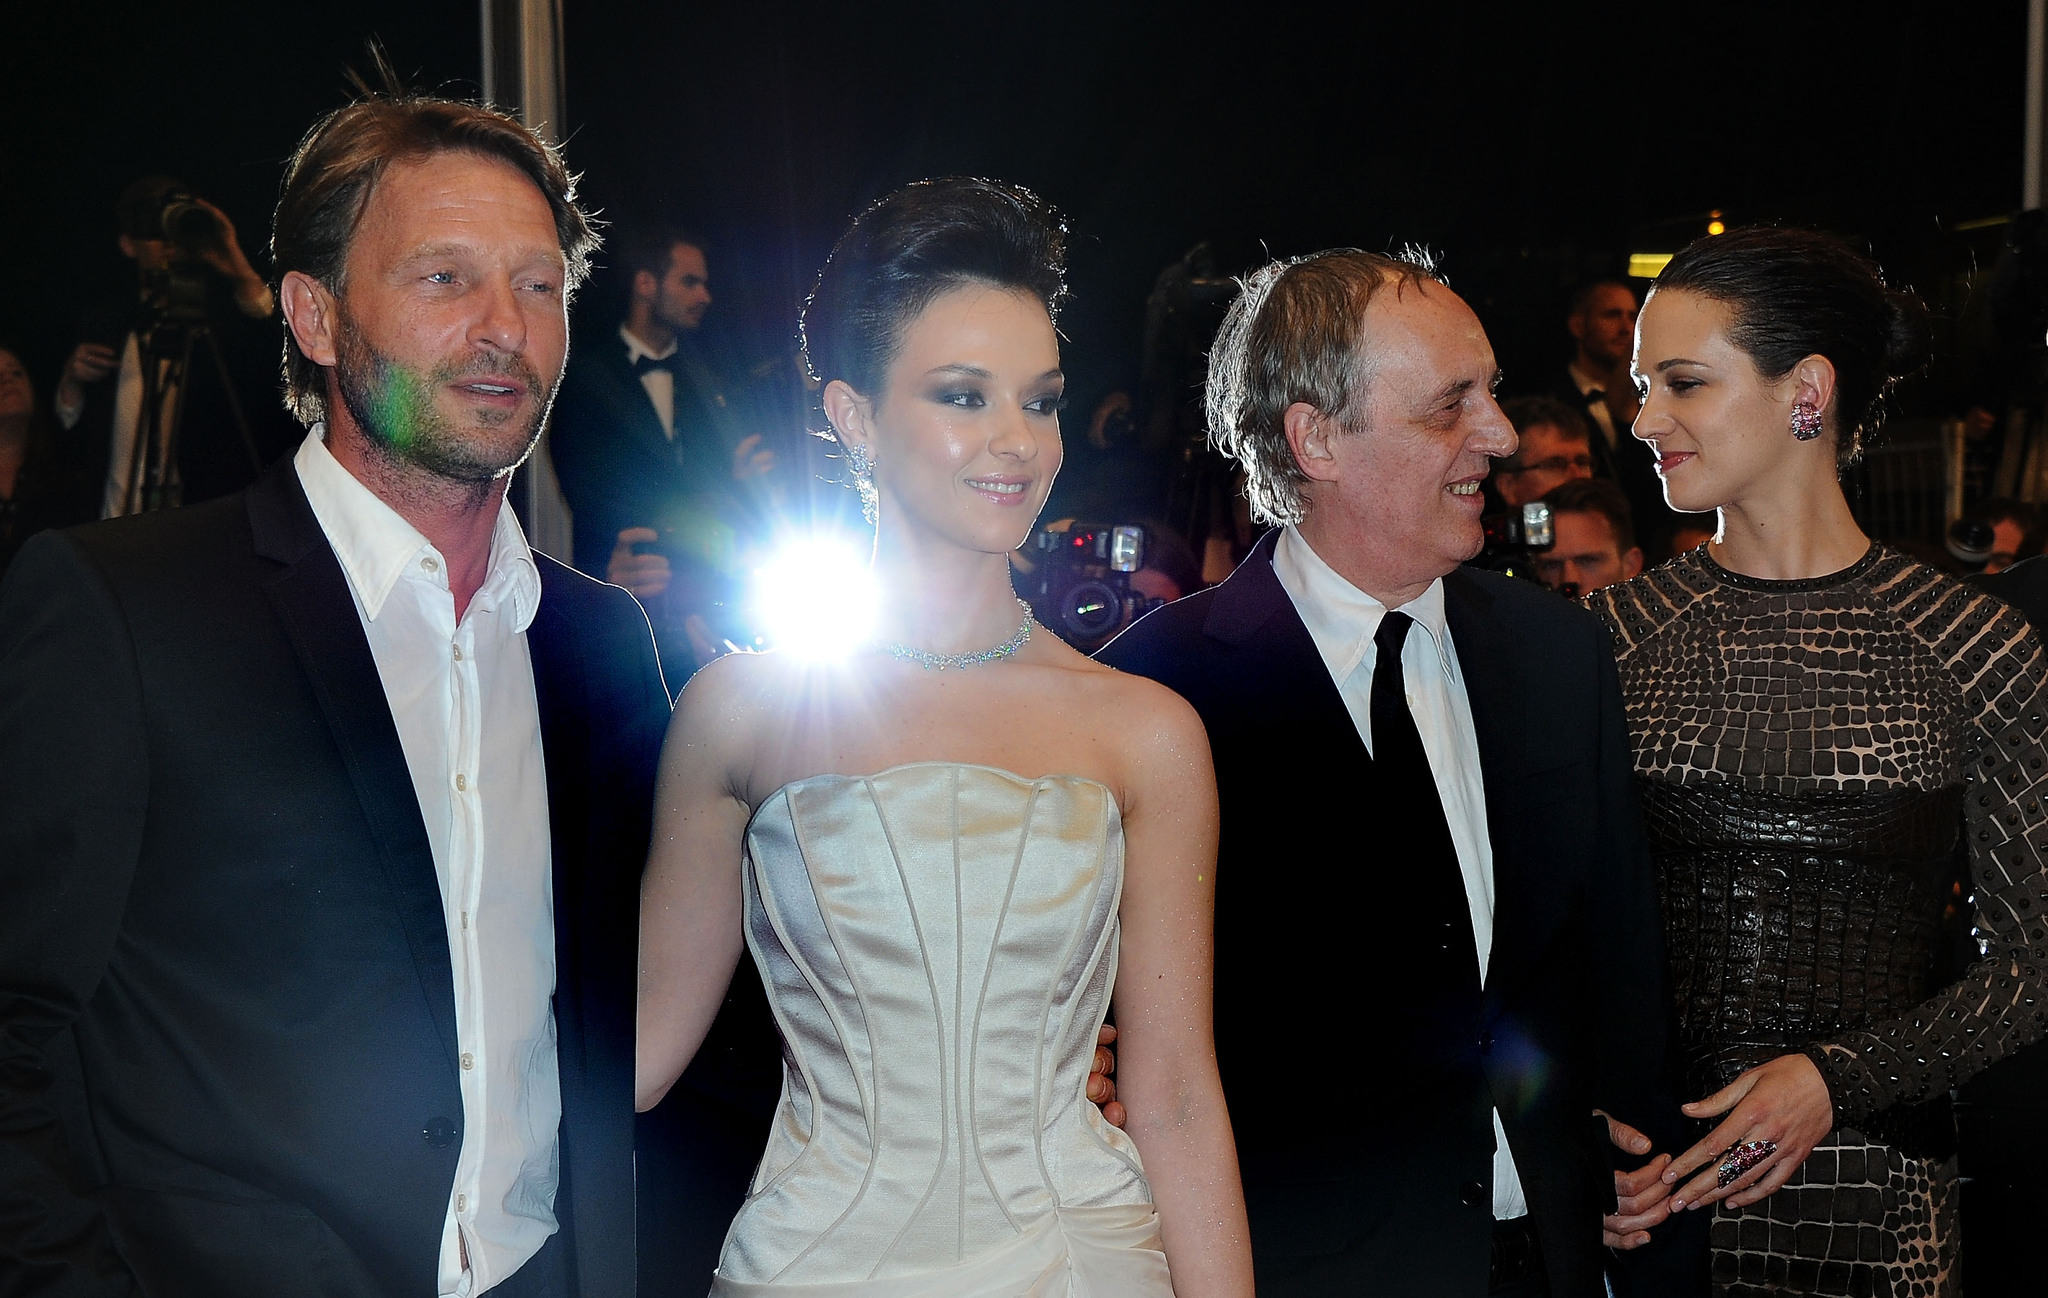 Asia Argento, Dario Argento, Thomas Kretschmann and Marta Gastini at event of Dracula 3D (2012)